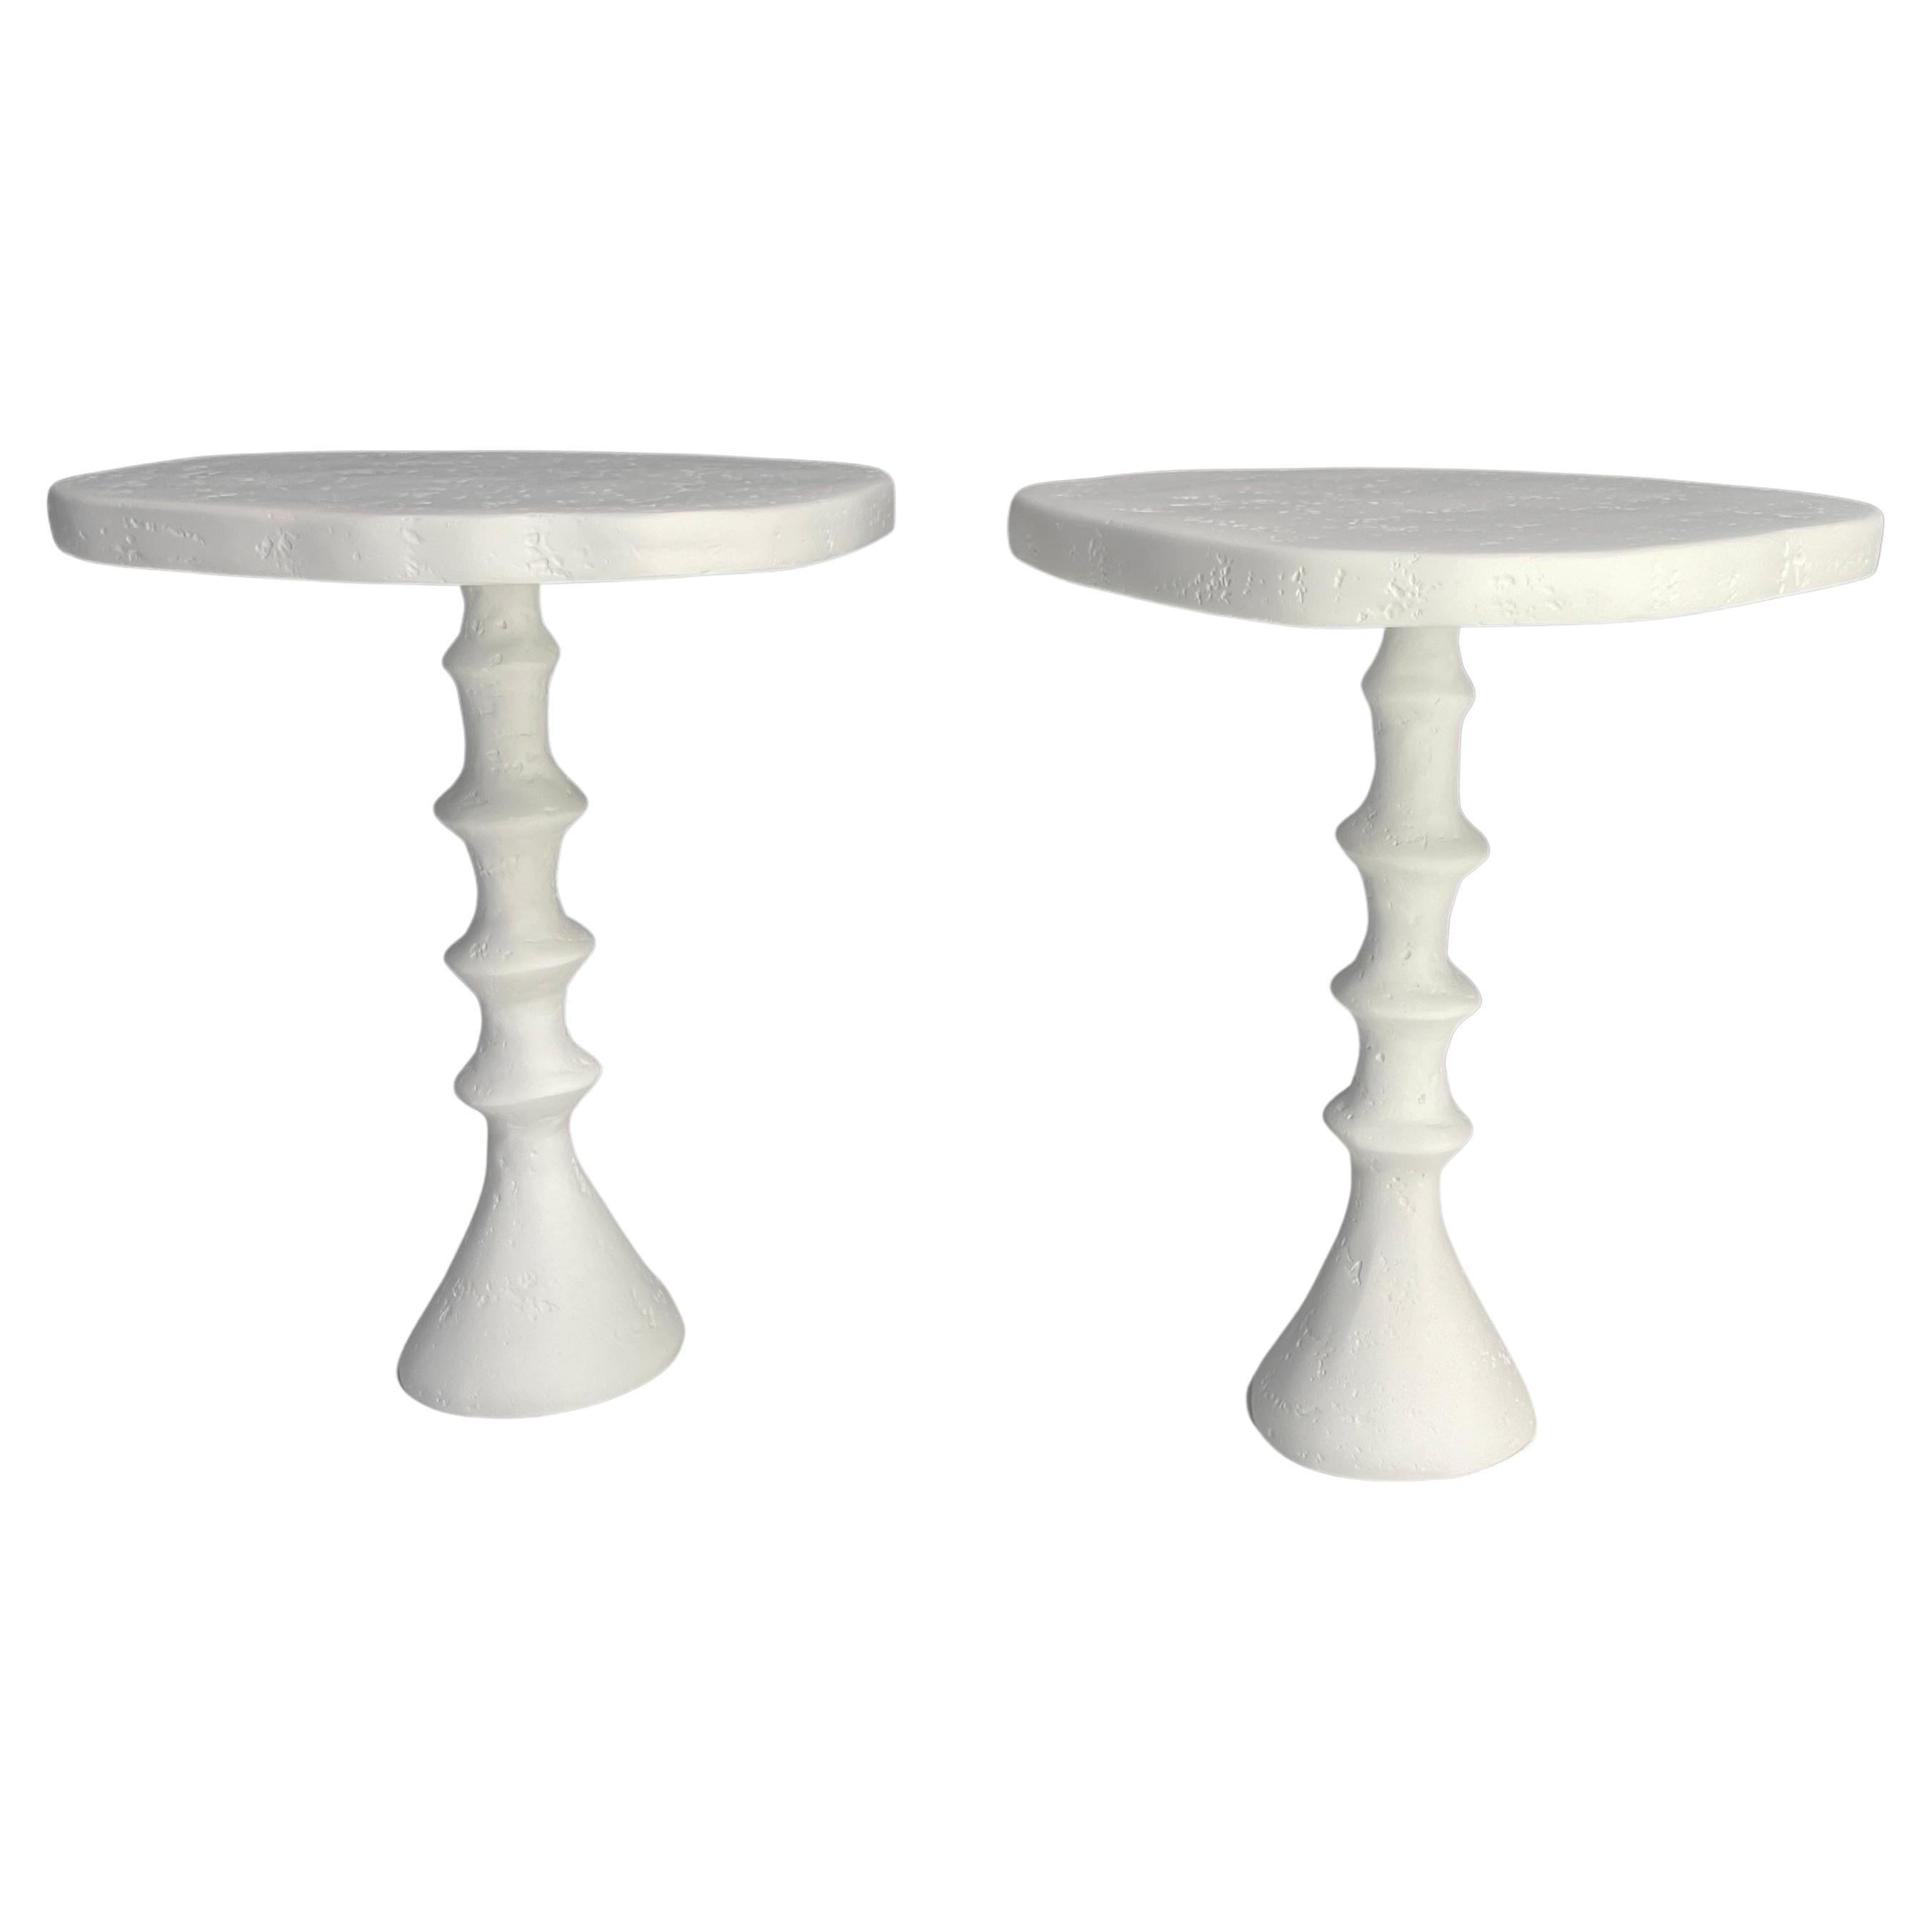 Pair of St Paul Plaster Side Table by Bourgeois Boheme Atelier 'Petit Modèle' For Sale